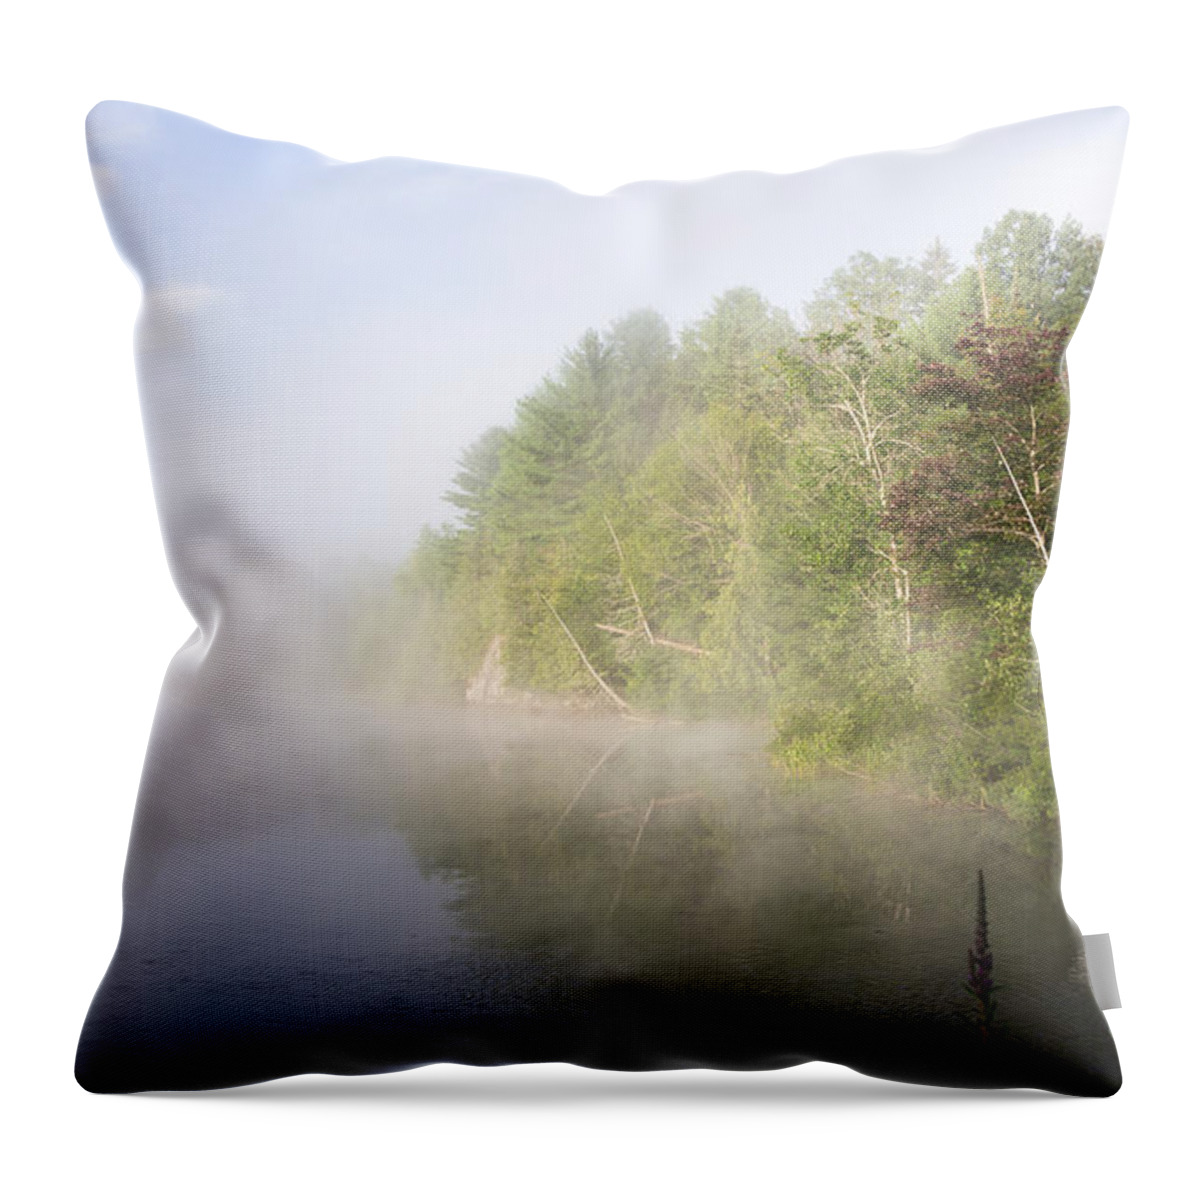 Fog Throw Pillow featuring the photograph Awaking by Jola Martysz